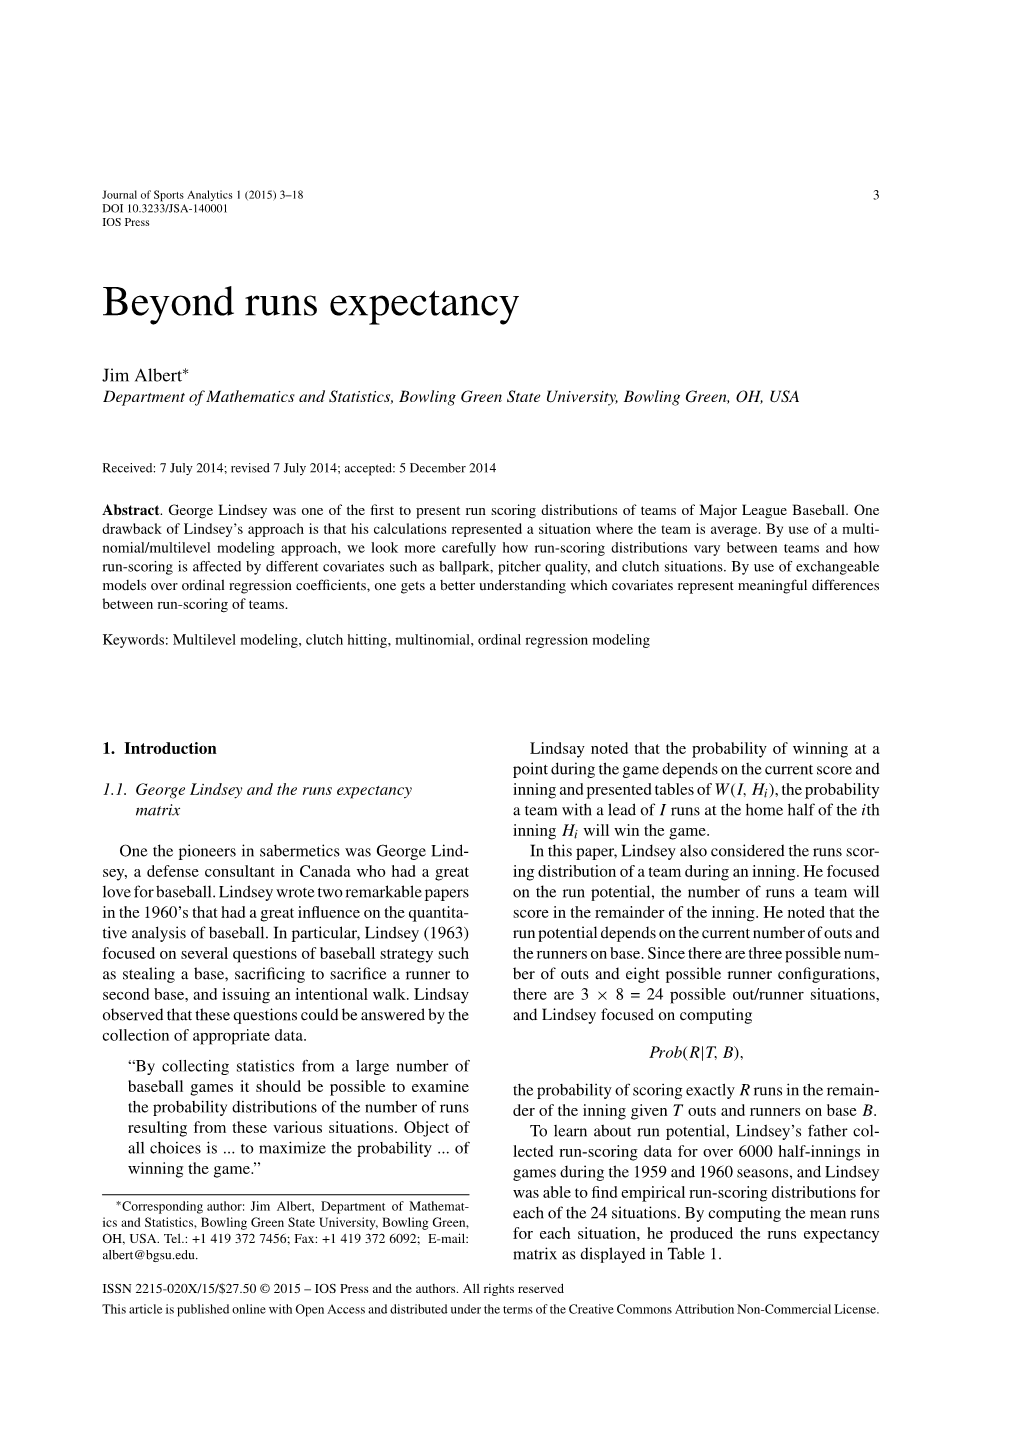 Beyond Runs Expectancy